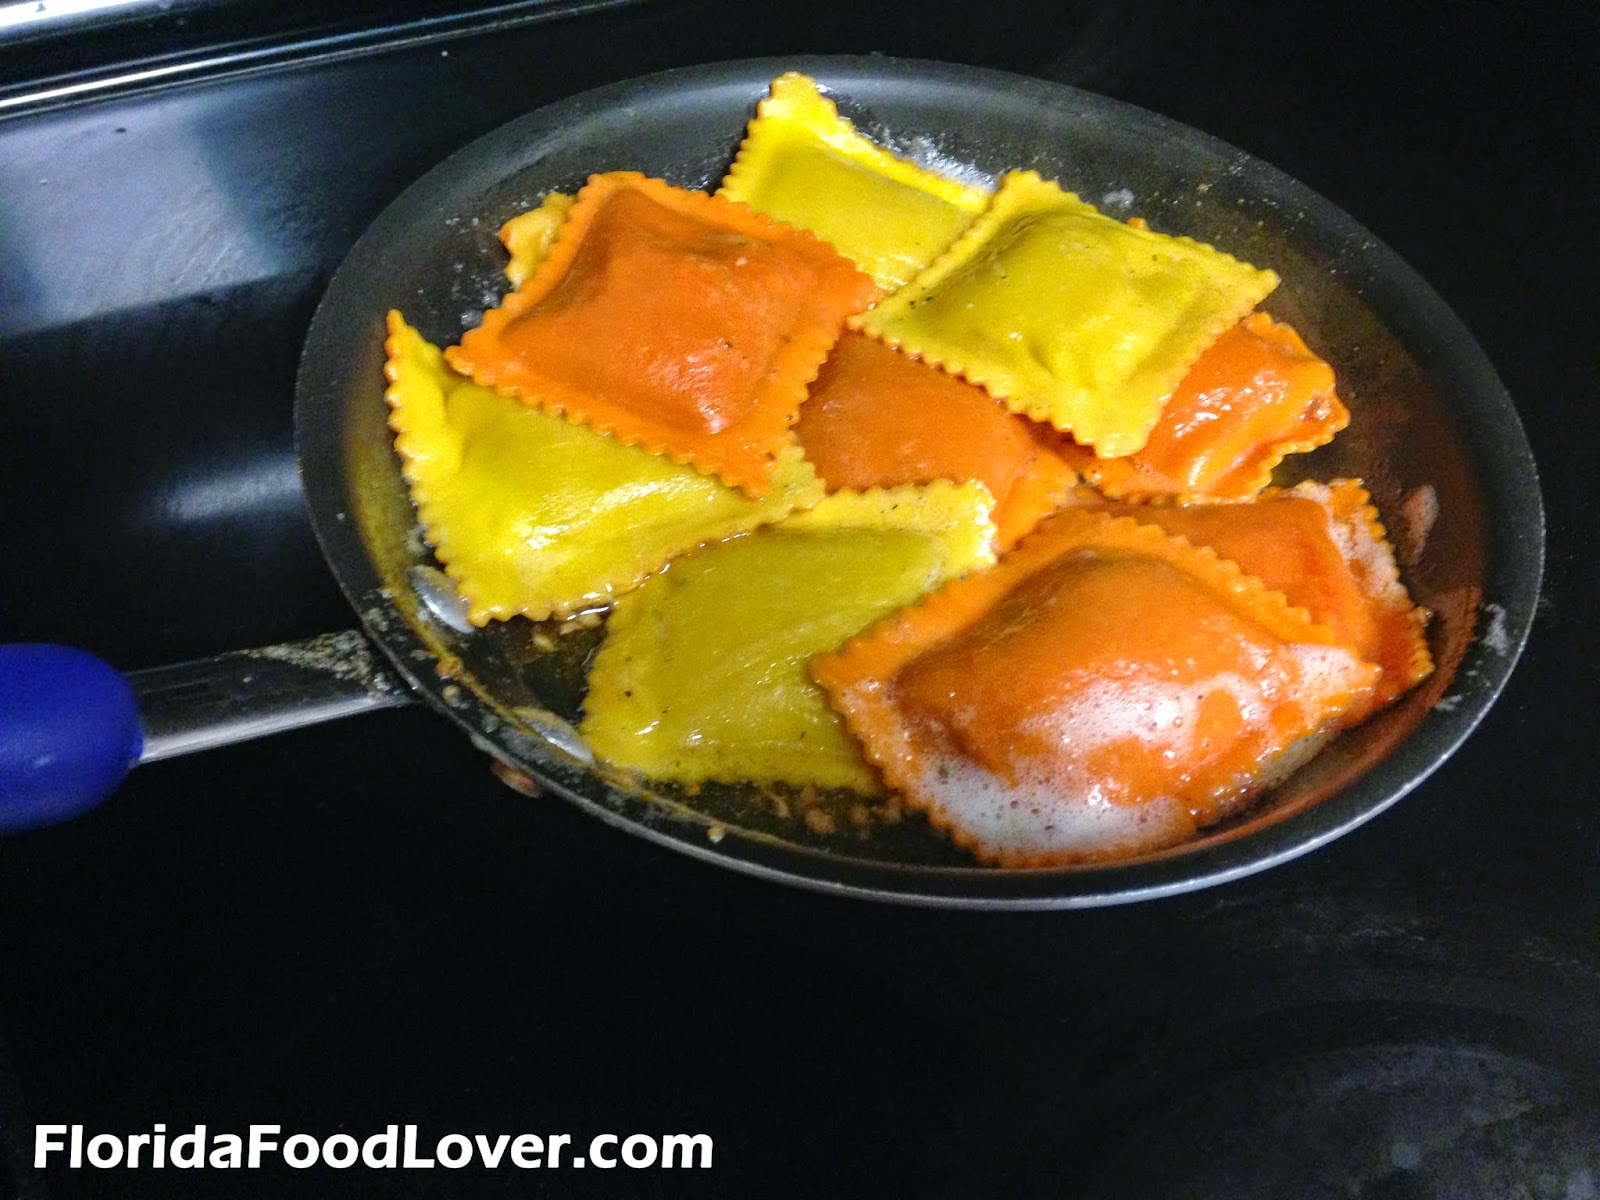 Florida Food Lover: Pumpkin Ravioli with Brown Butter Sage Sauce